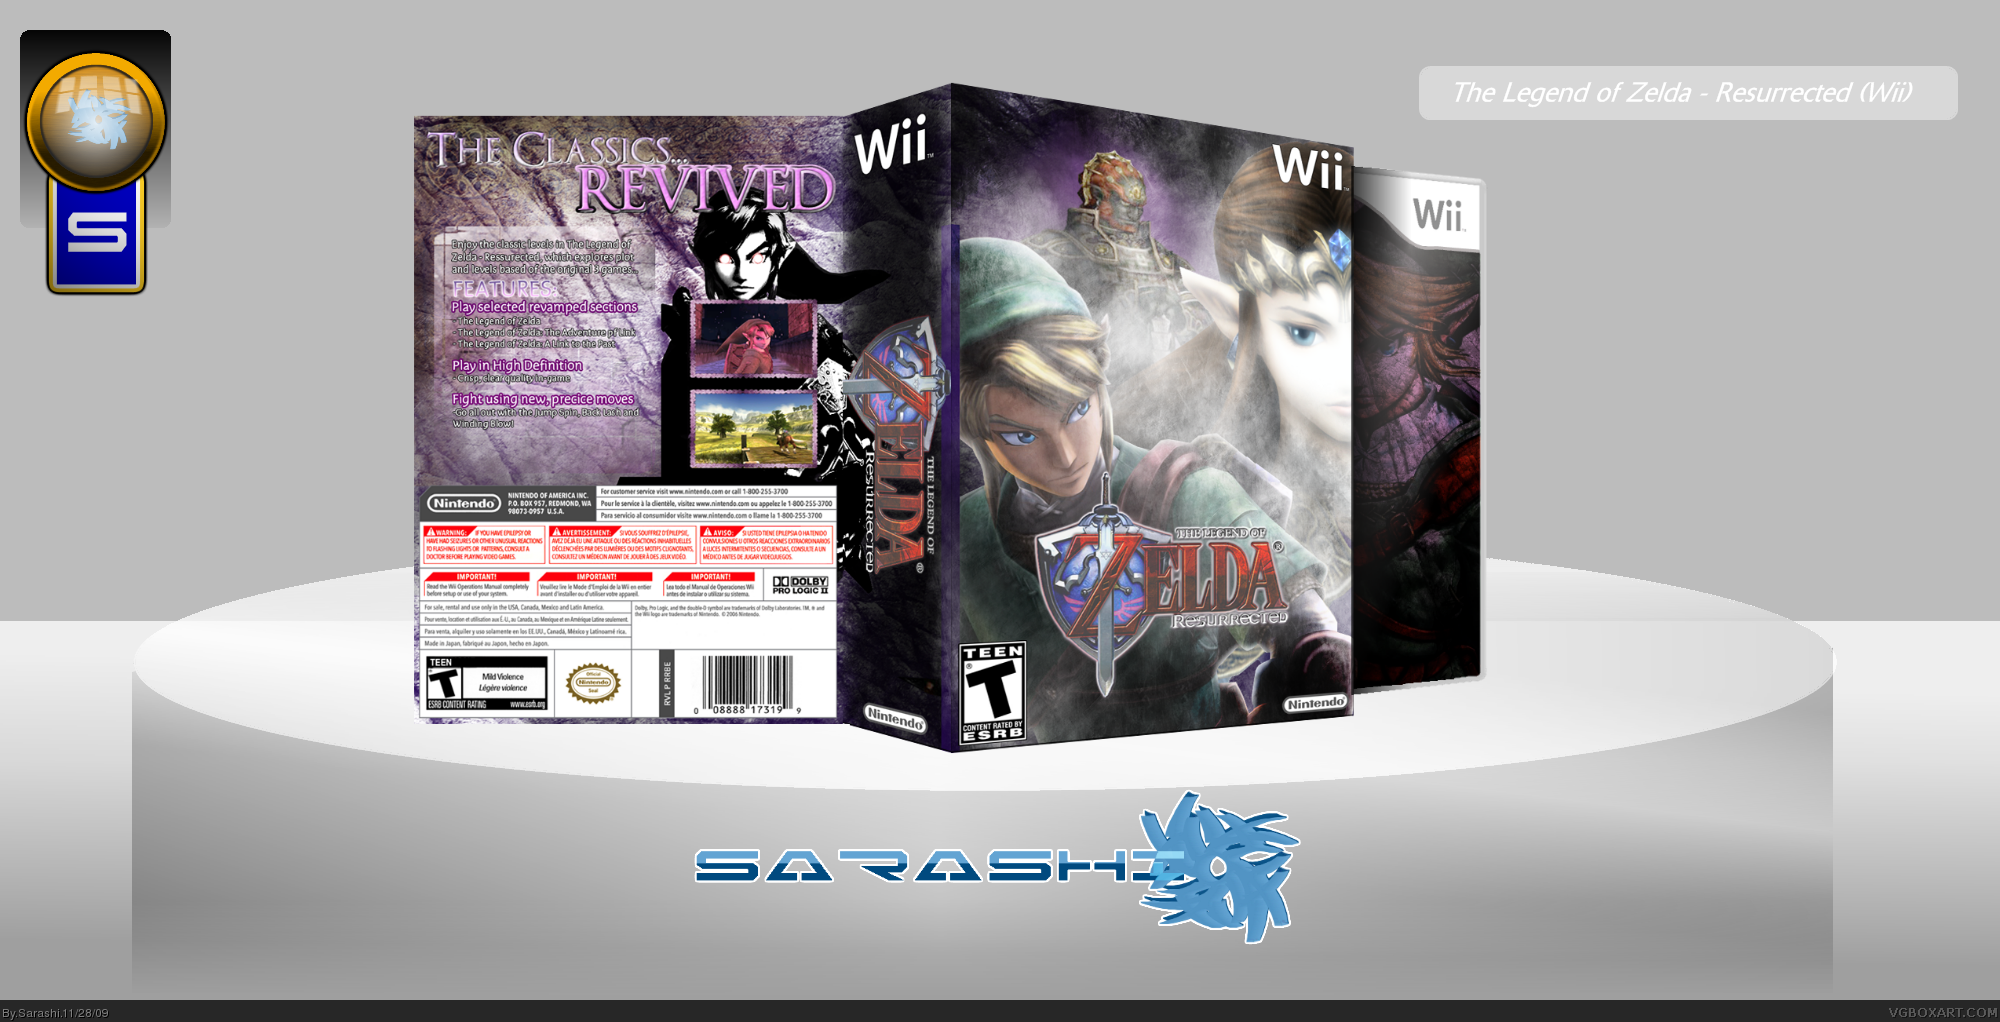 The Legend Of Zelda - Resurrected box cover